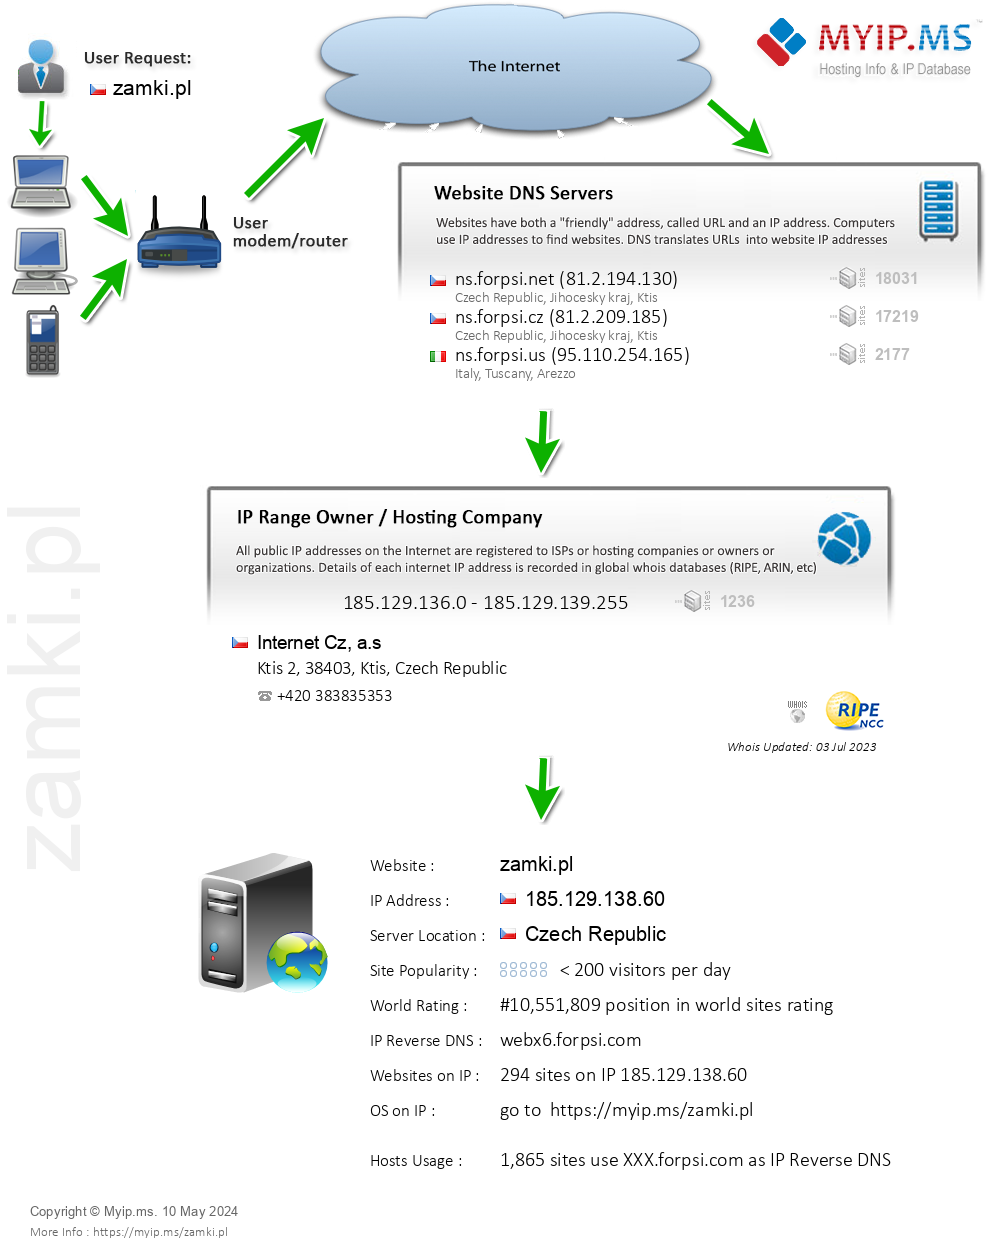 Zamki.pl - Website Hosting Visual IP Diagram